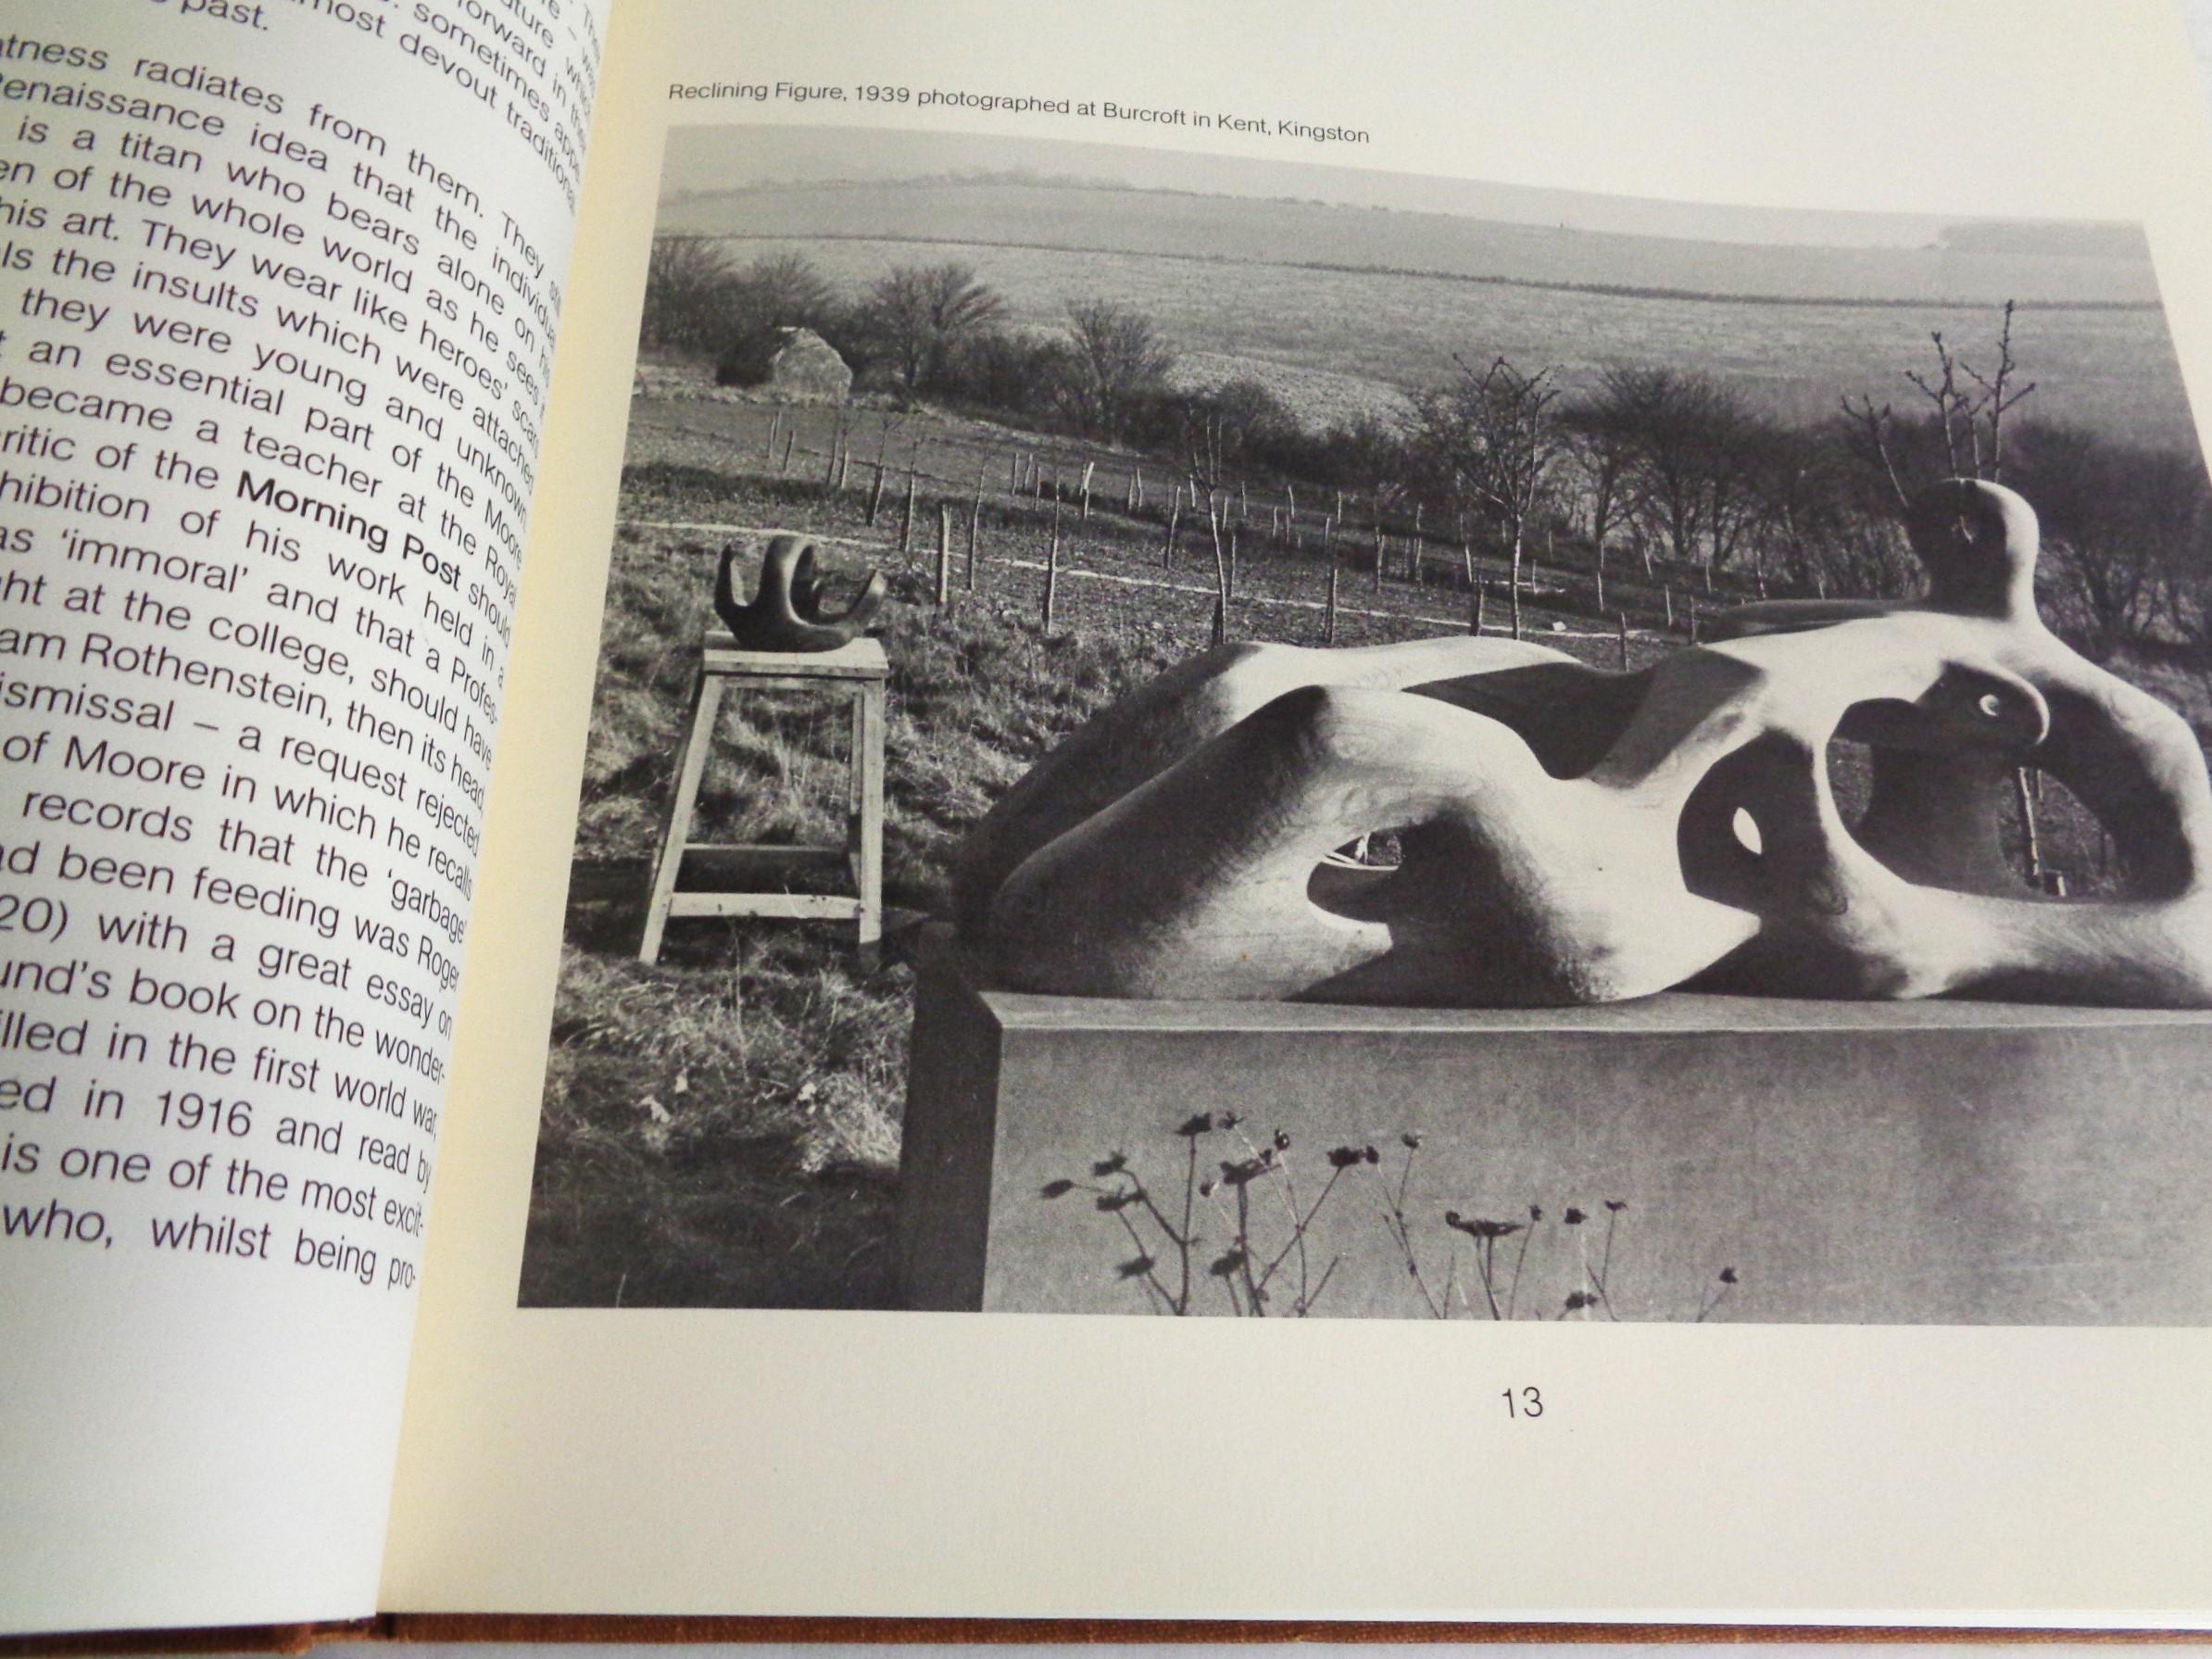 Henry Moore Sculptures in Landscape - 1978 Clarkson N. Potter - 1st Edition For Sale 5